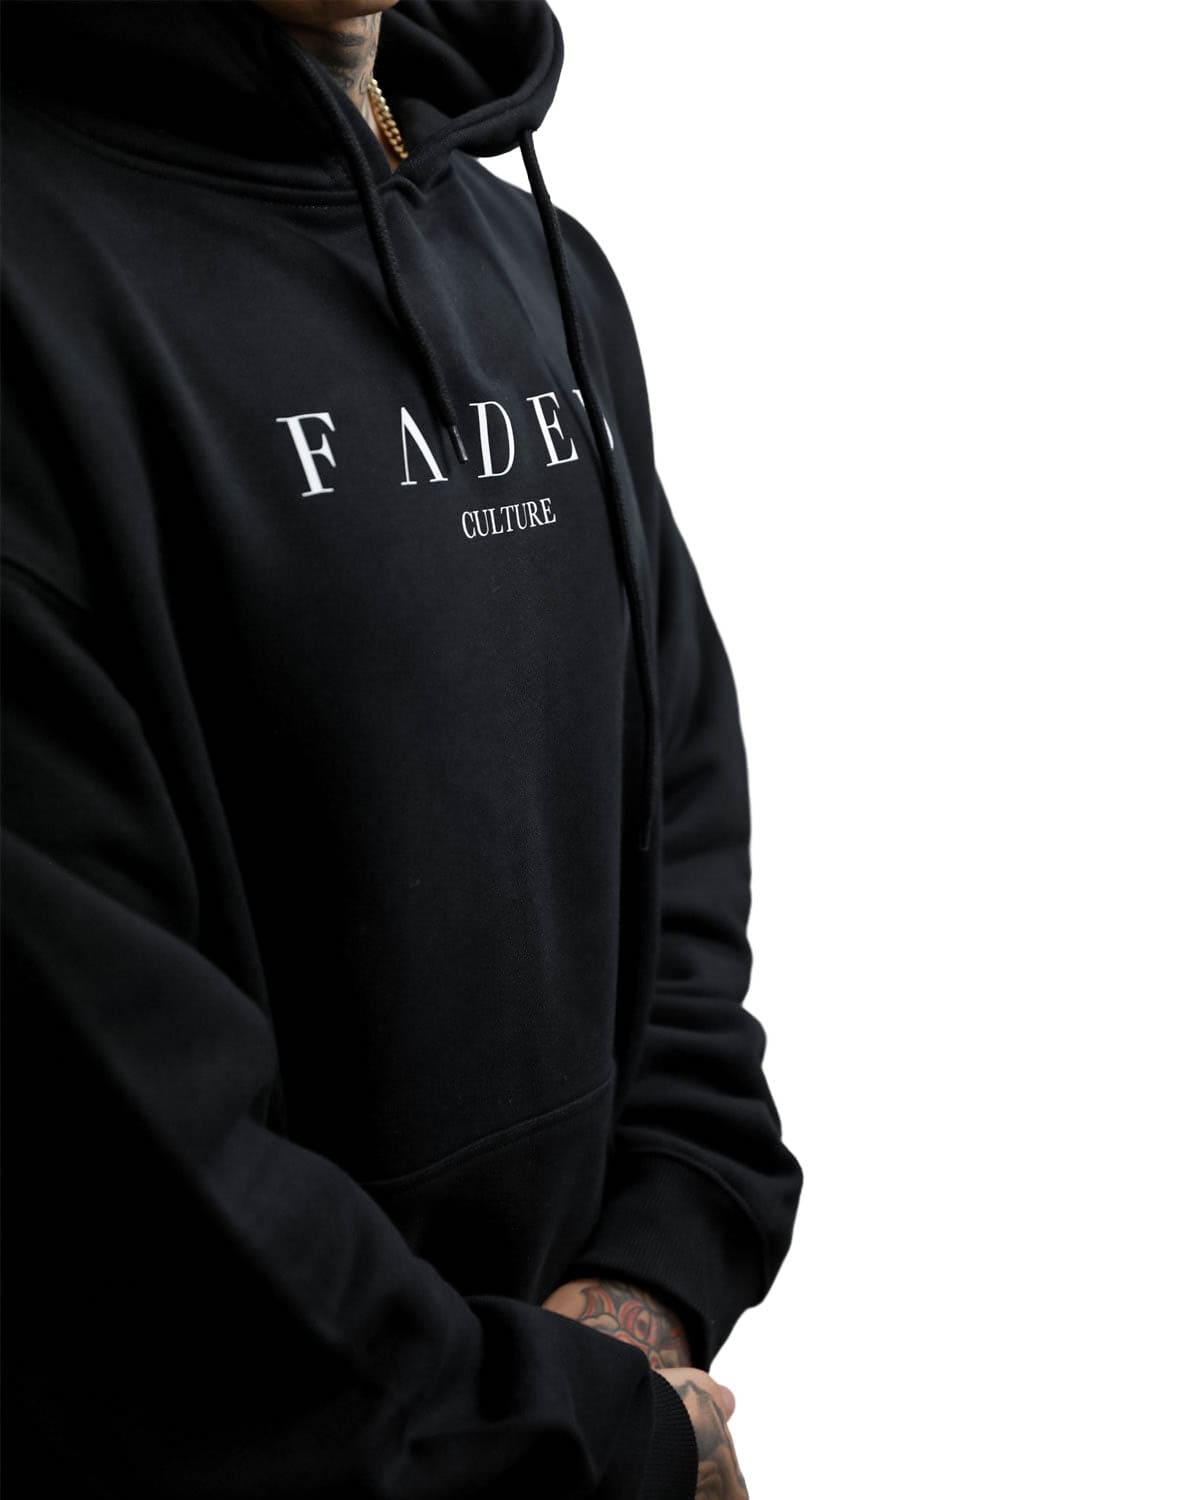 12.0 oz heavyweight fleece pullover, black FC logo hoodie with white print